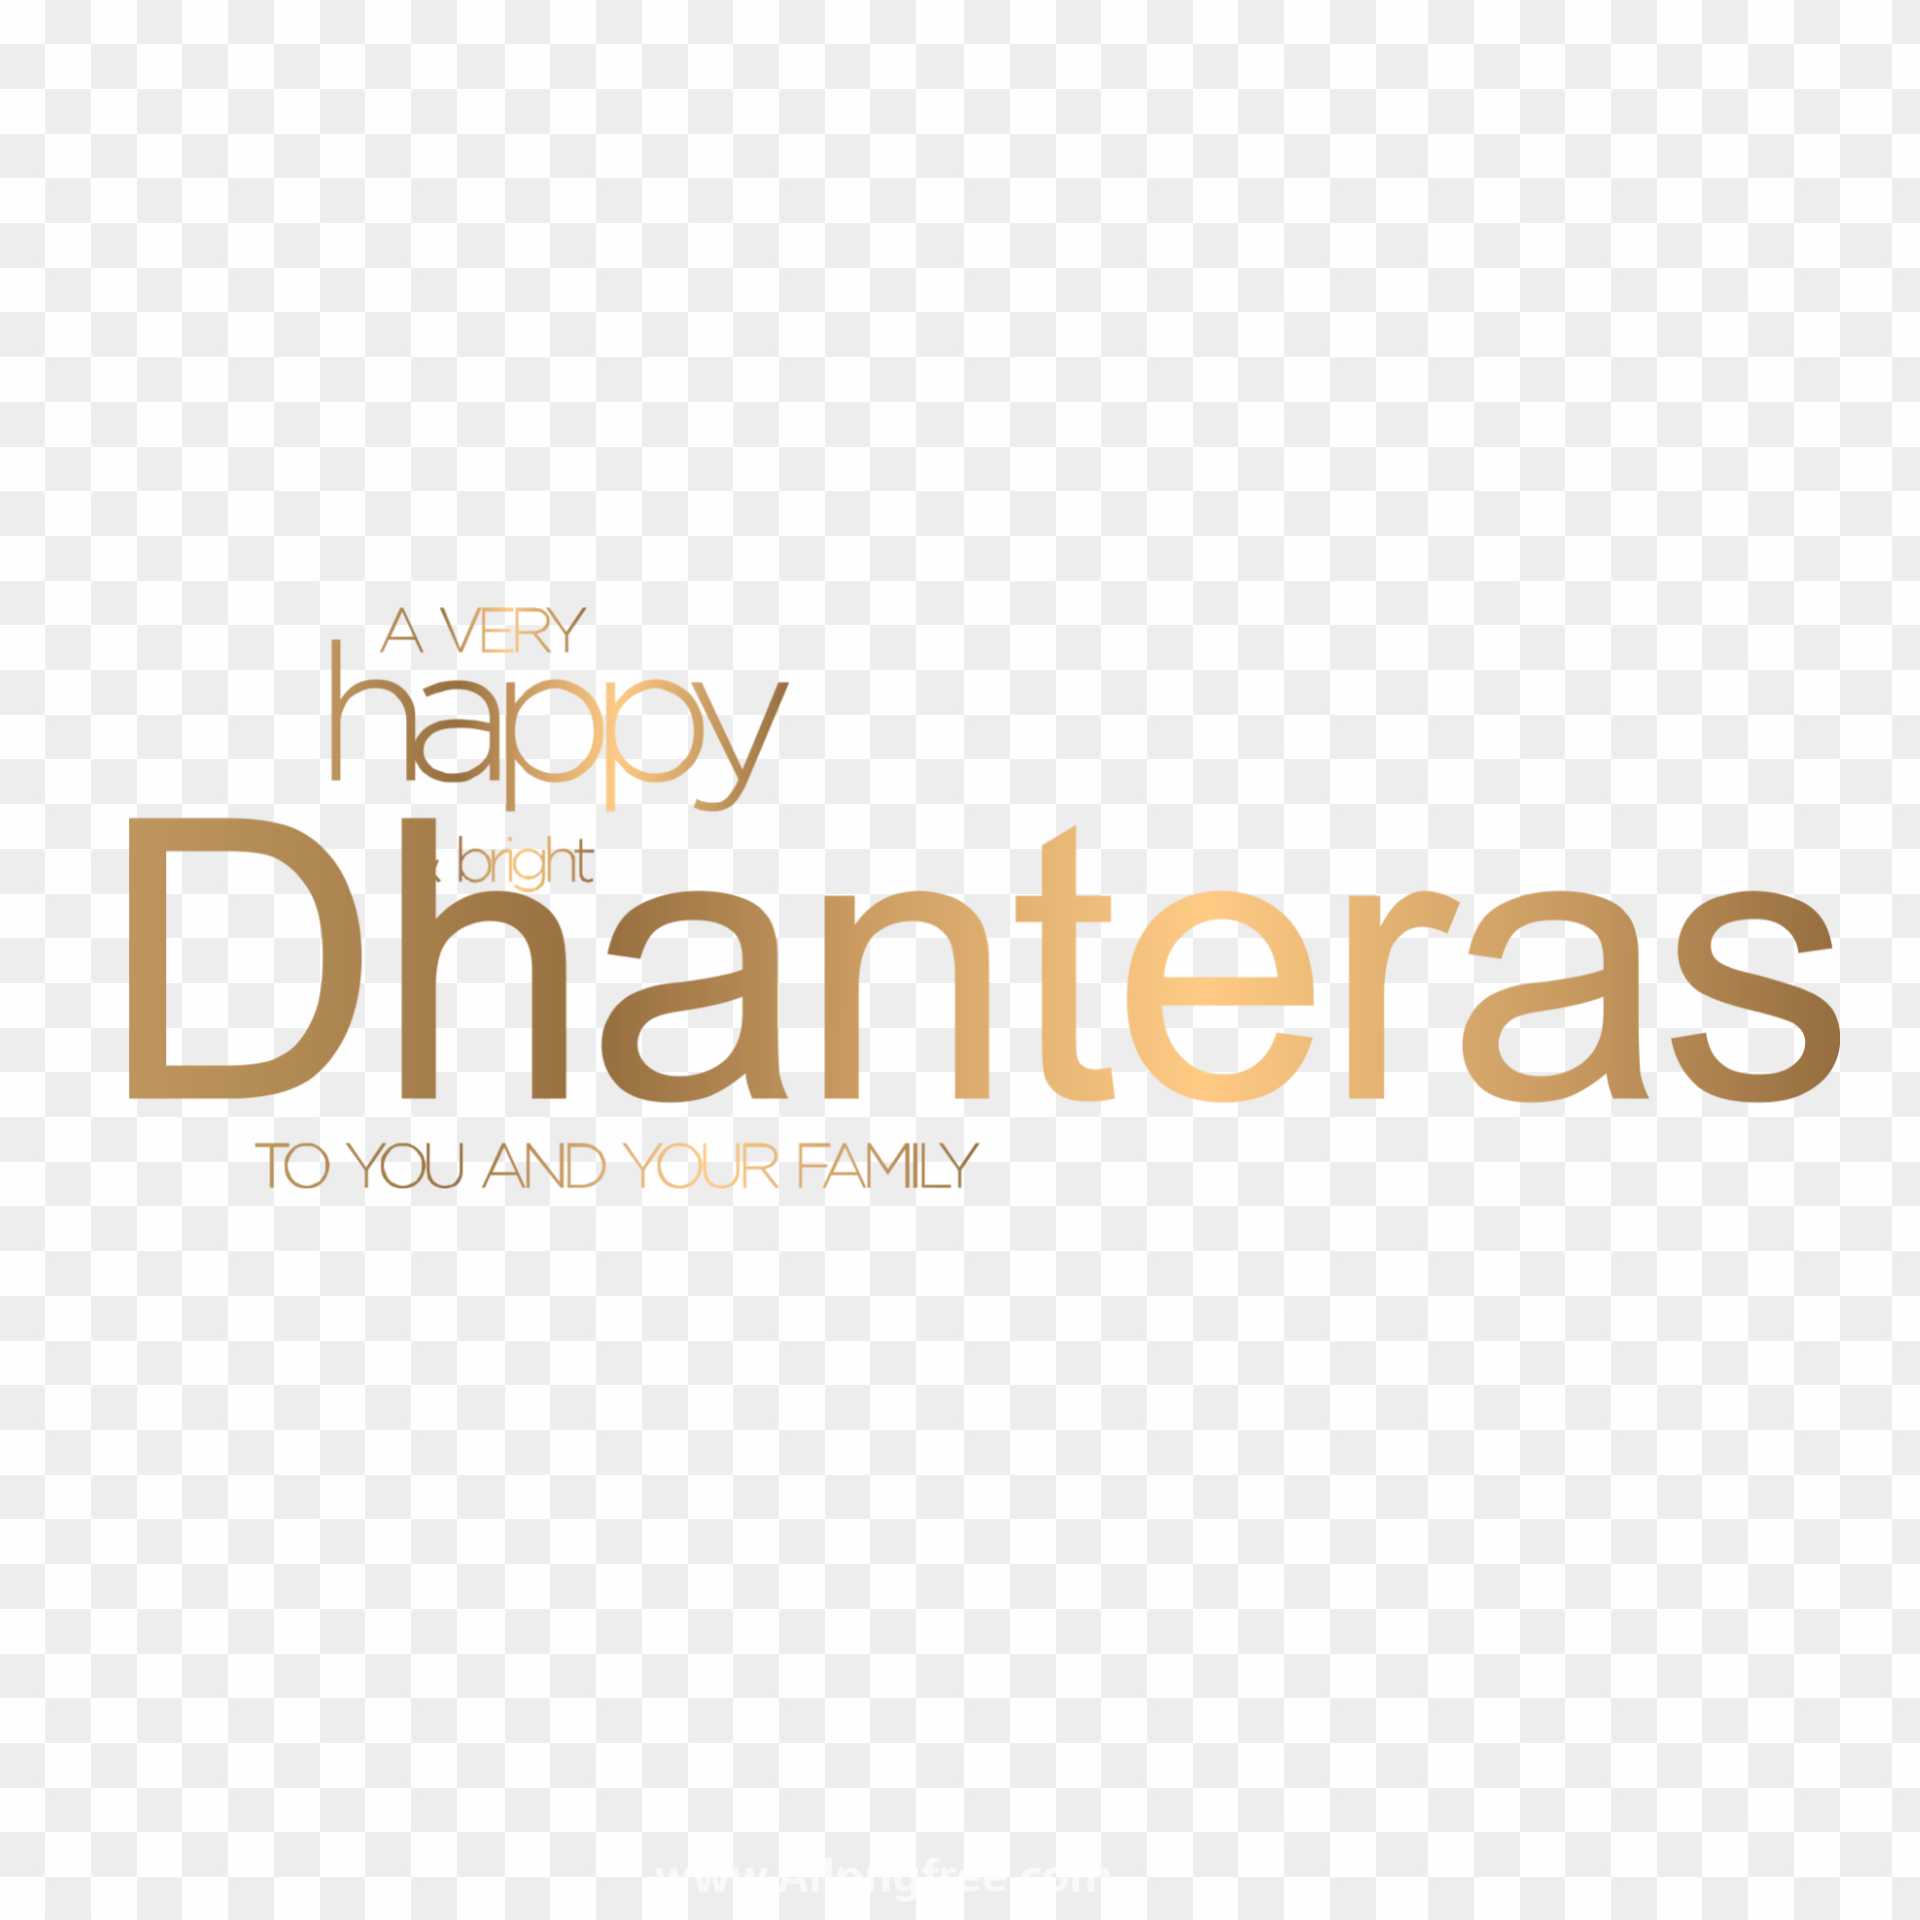 Happy Dhanteras png transparent image 